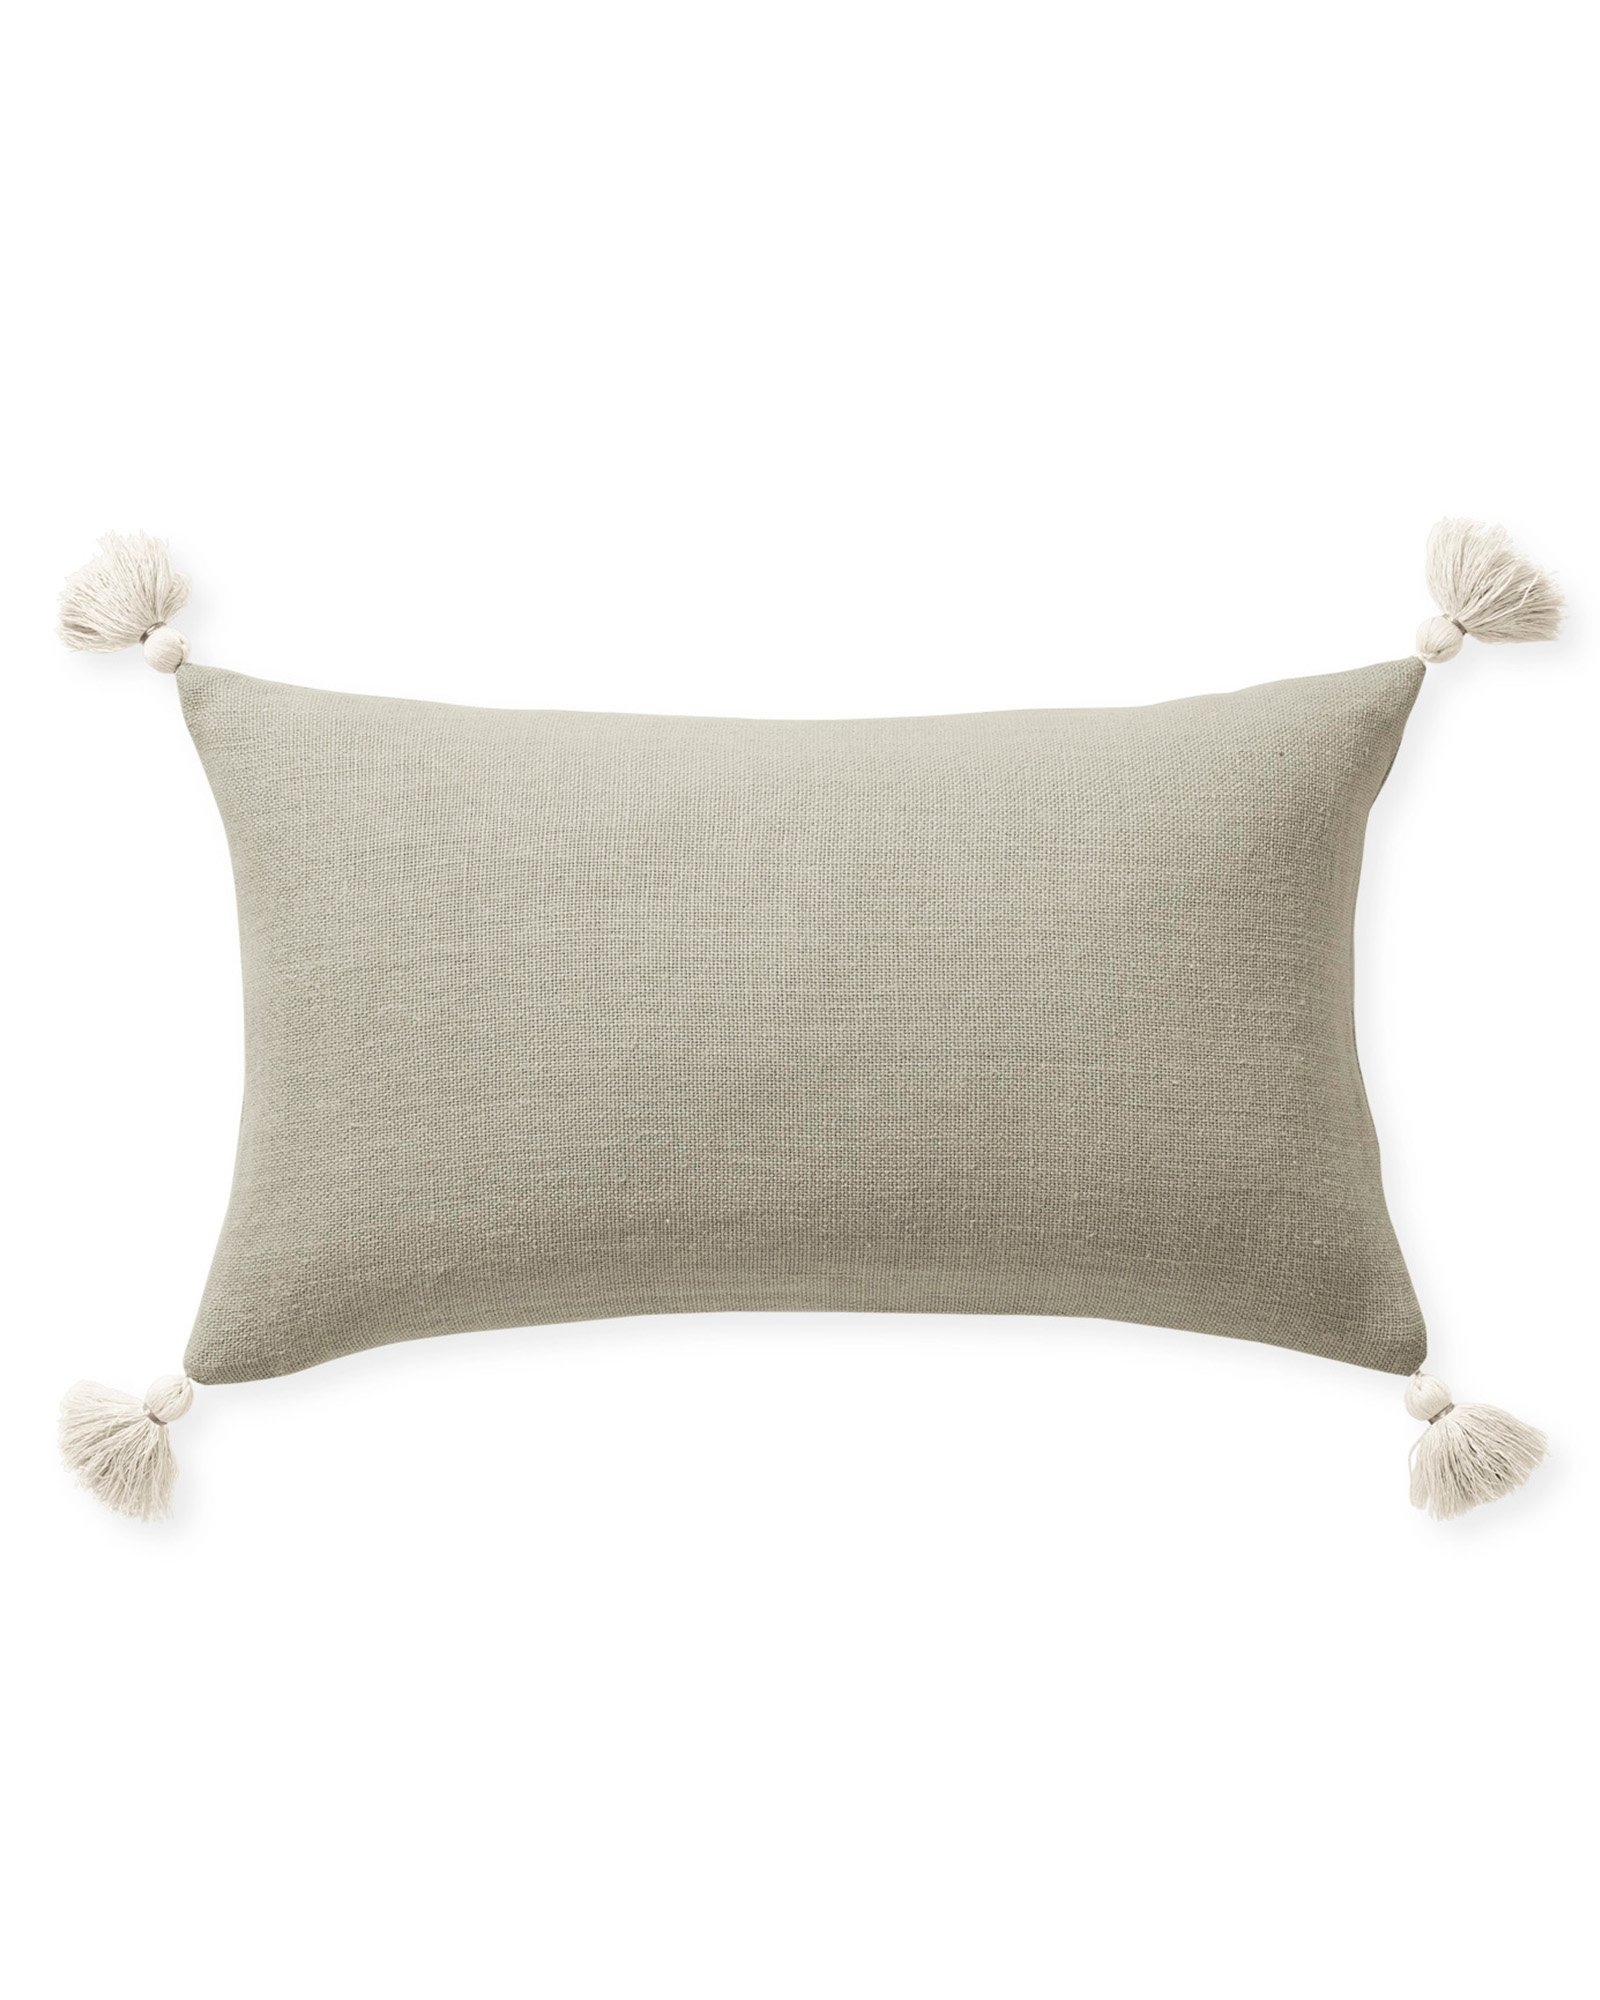 Eva Tassel 12" x 21" Pillow Cover - Flax - Insert sold separately - Image 0